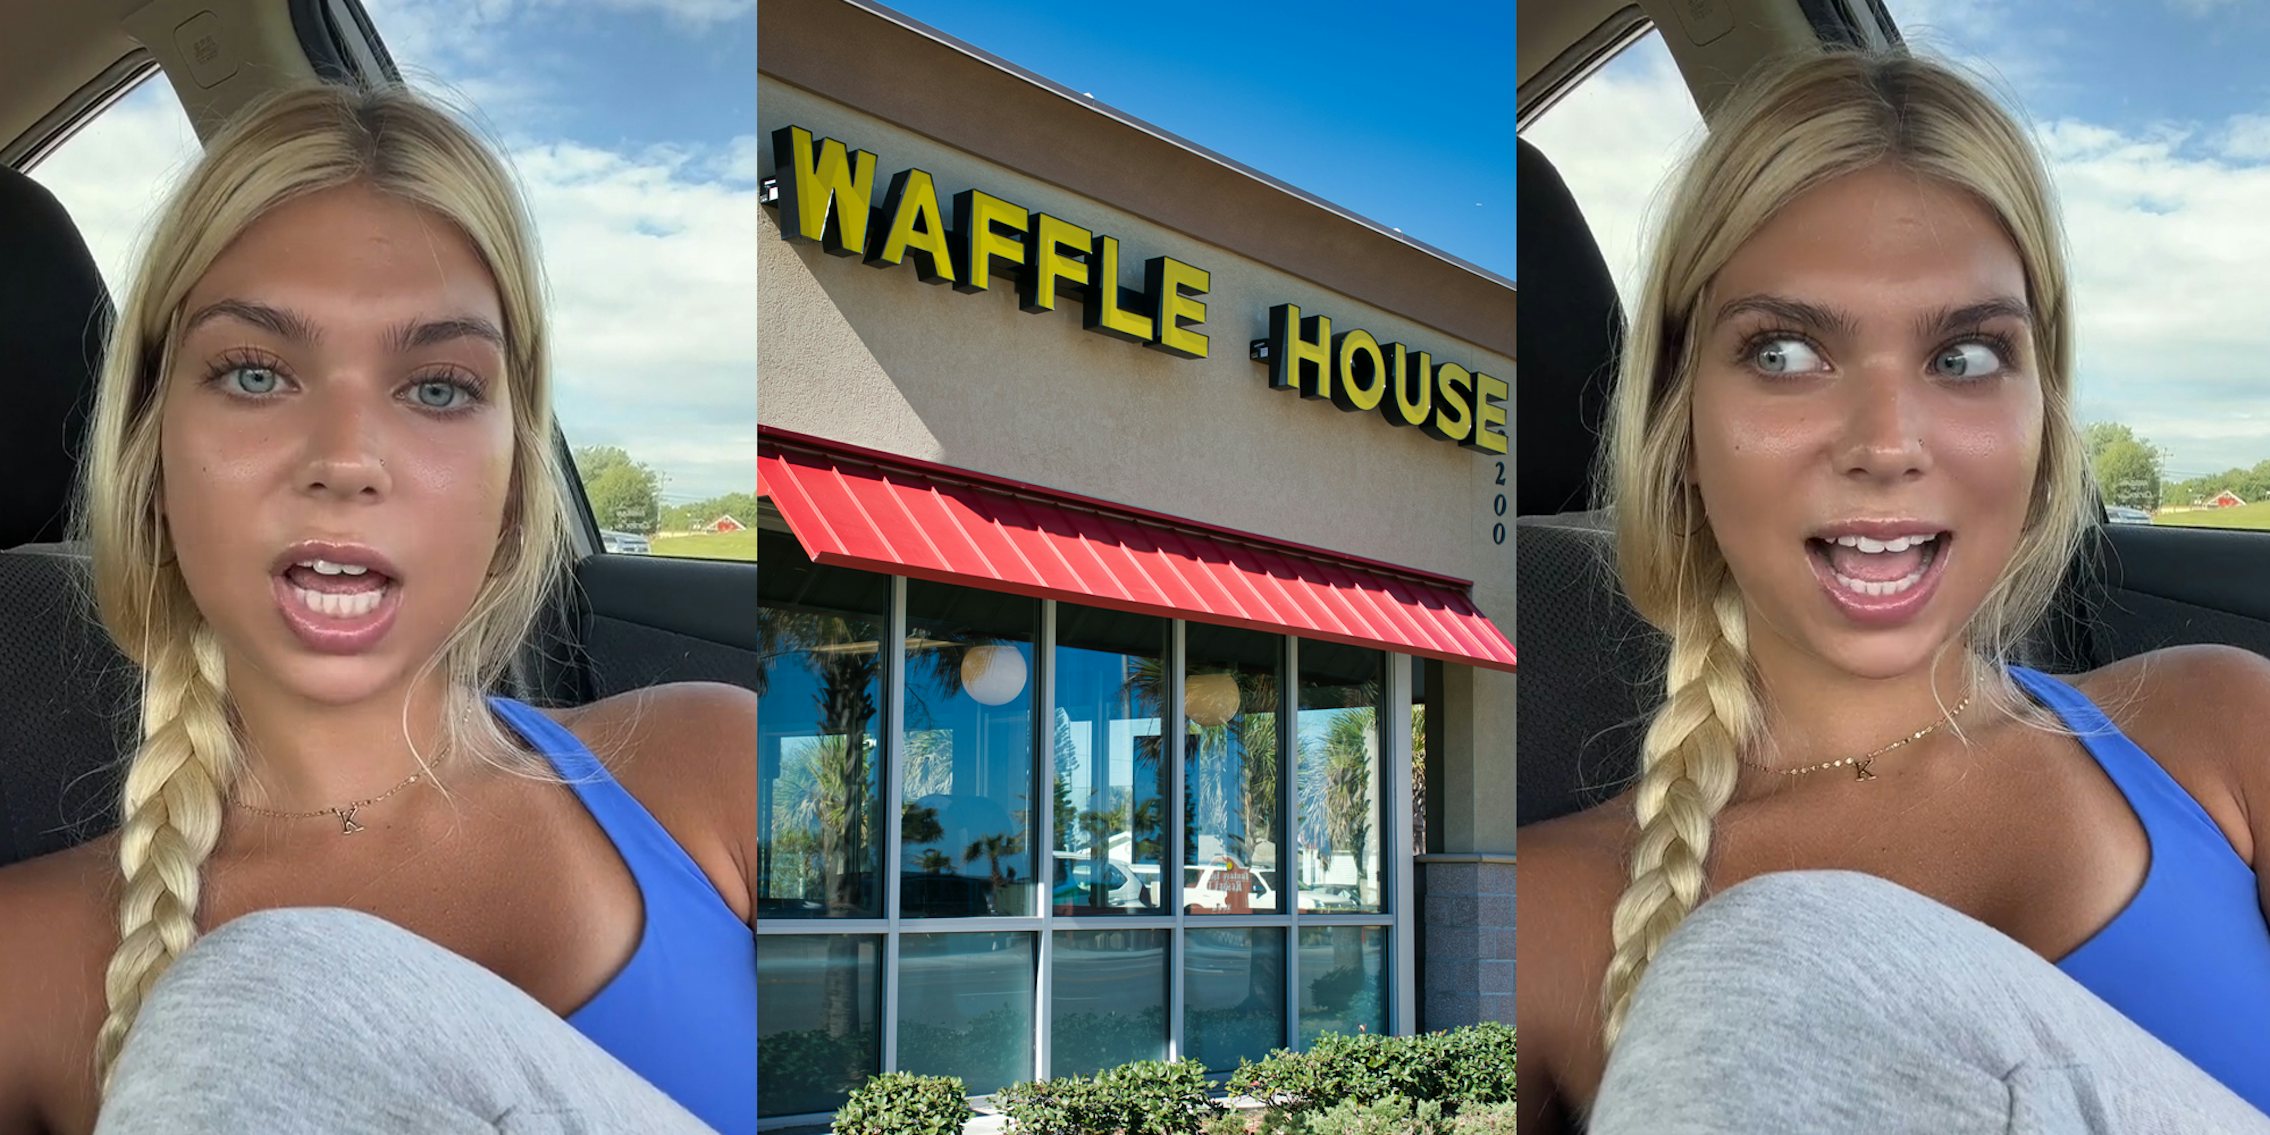 Waffle House customer speaking in car (l) Waffle House building with sign (c) Waffle House customer speaking (r)